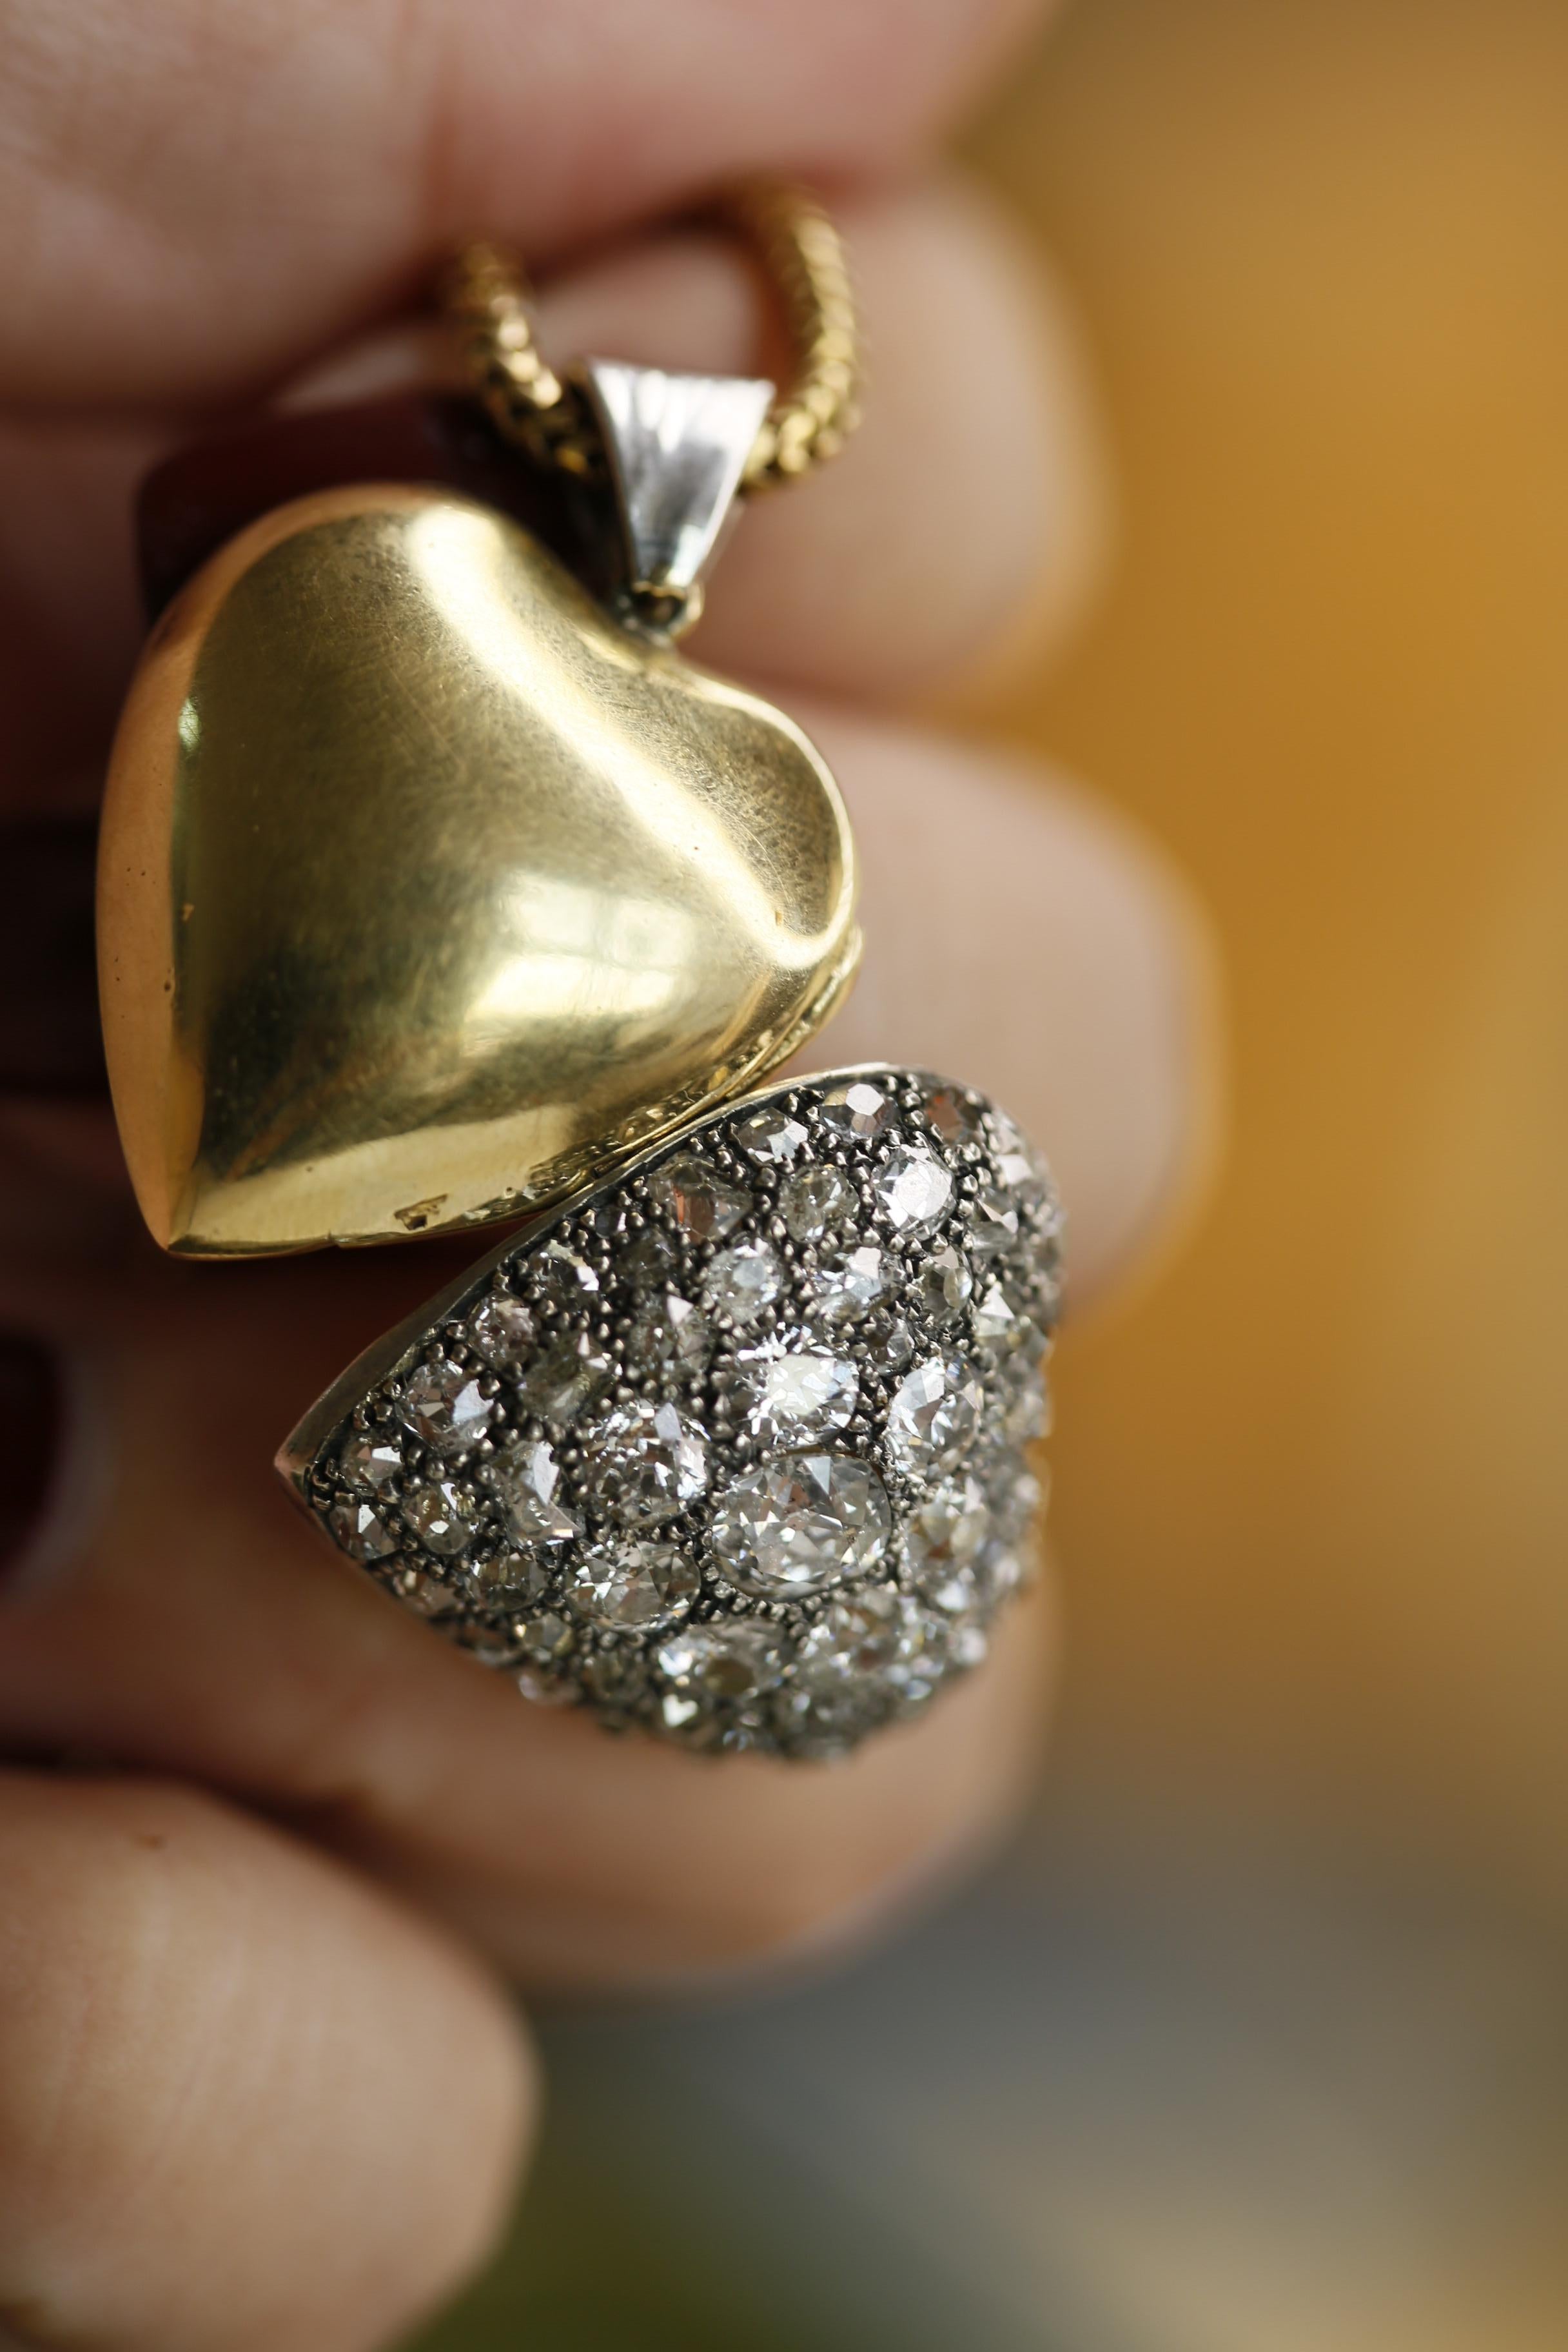 vintage diamond heart necklace